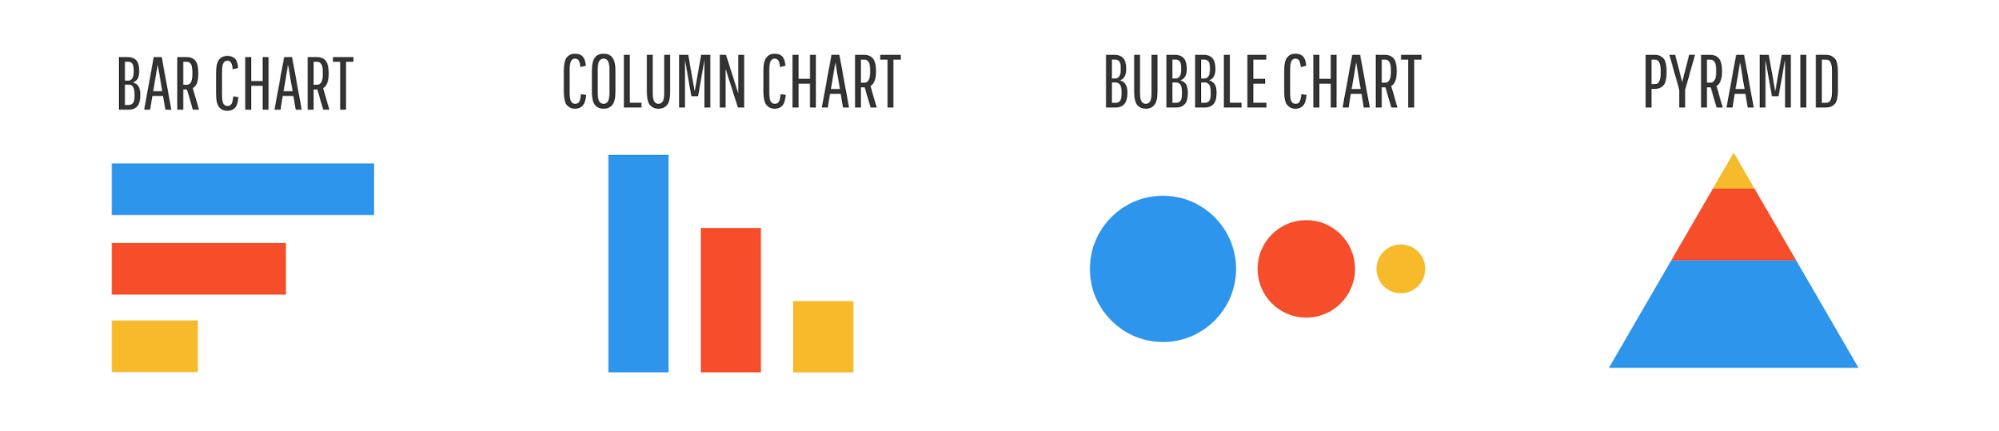 Bar chart, column chart, bubble chart and pyramid chart